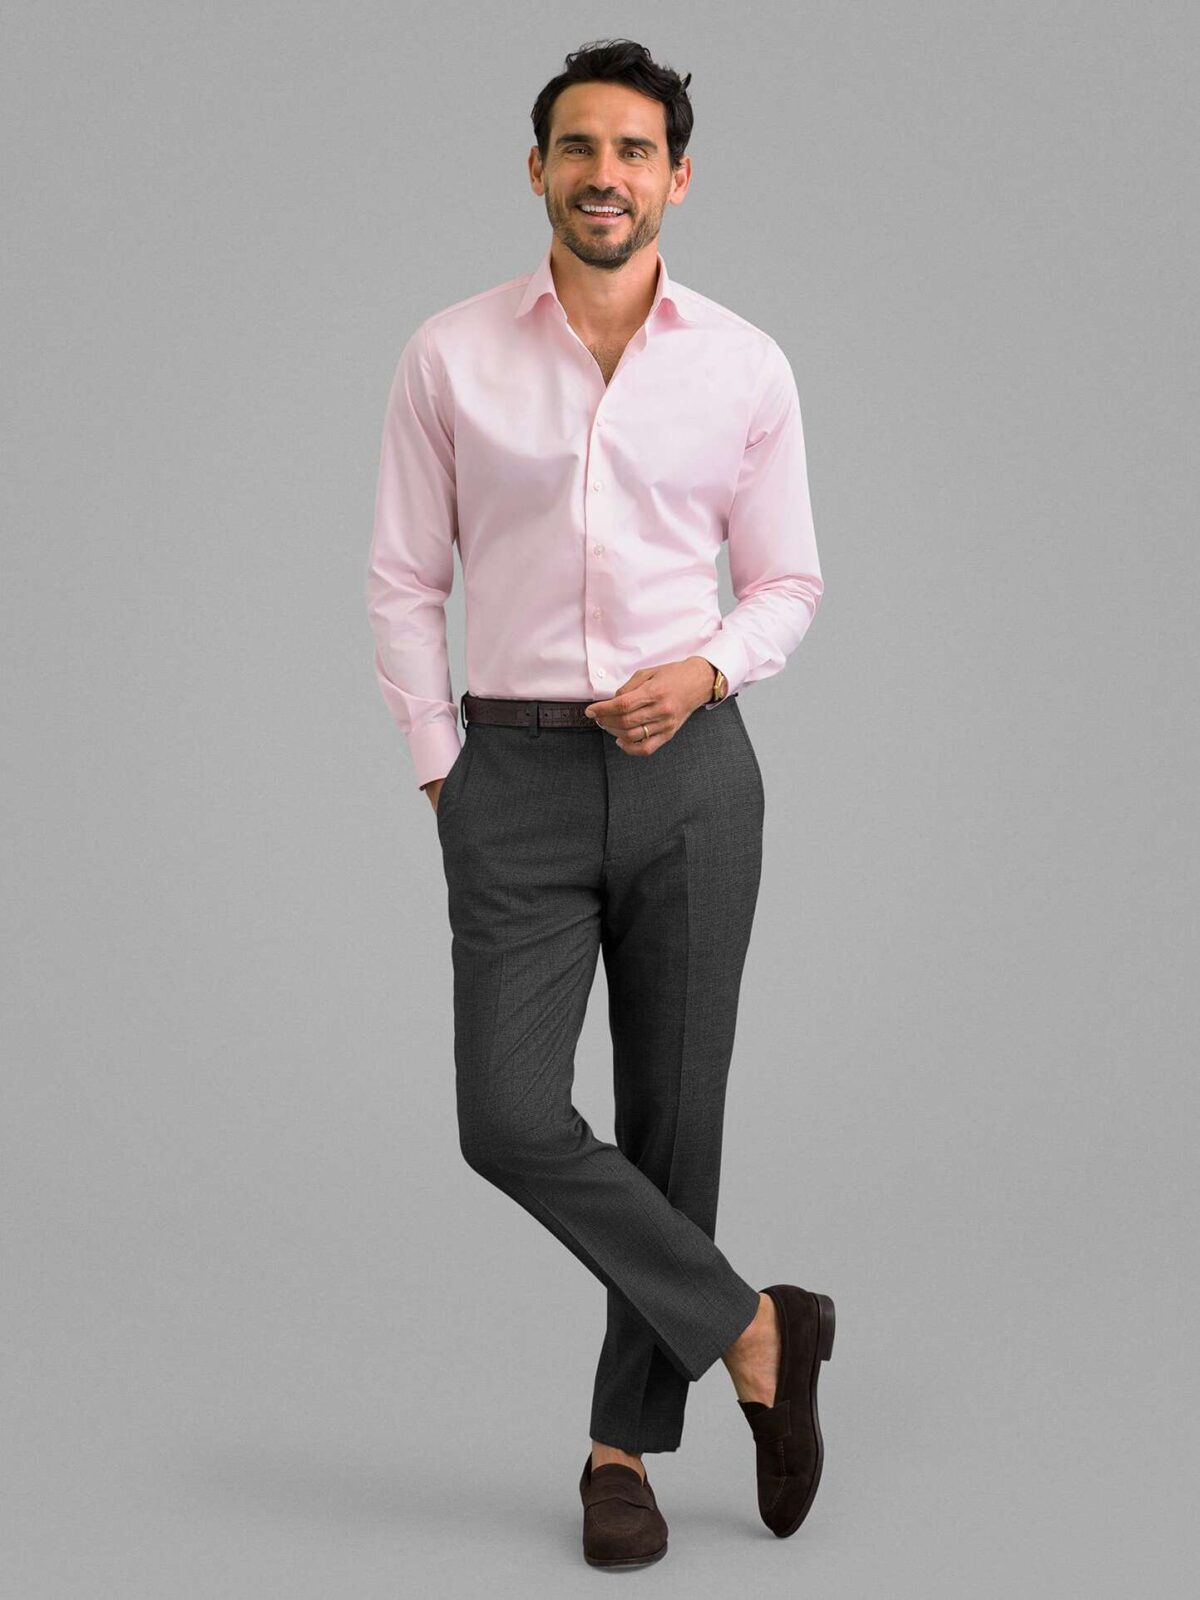 Light pink shirt with chocolate color trouser | Pink shirt men, Black pants  men, Pants outfit men